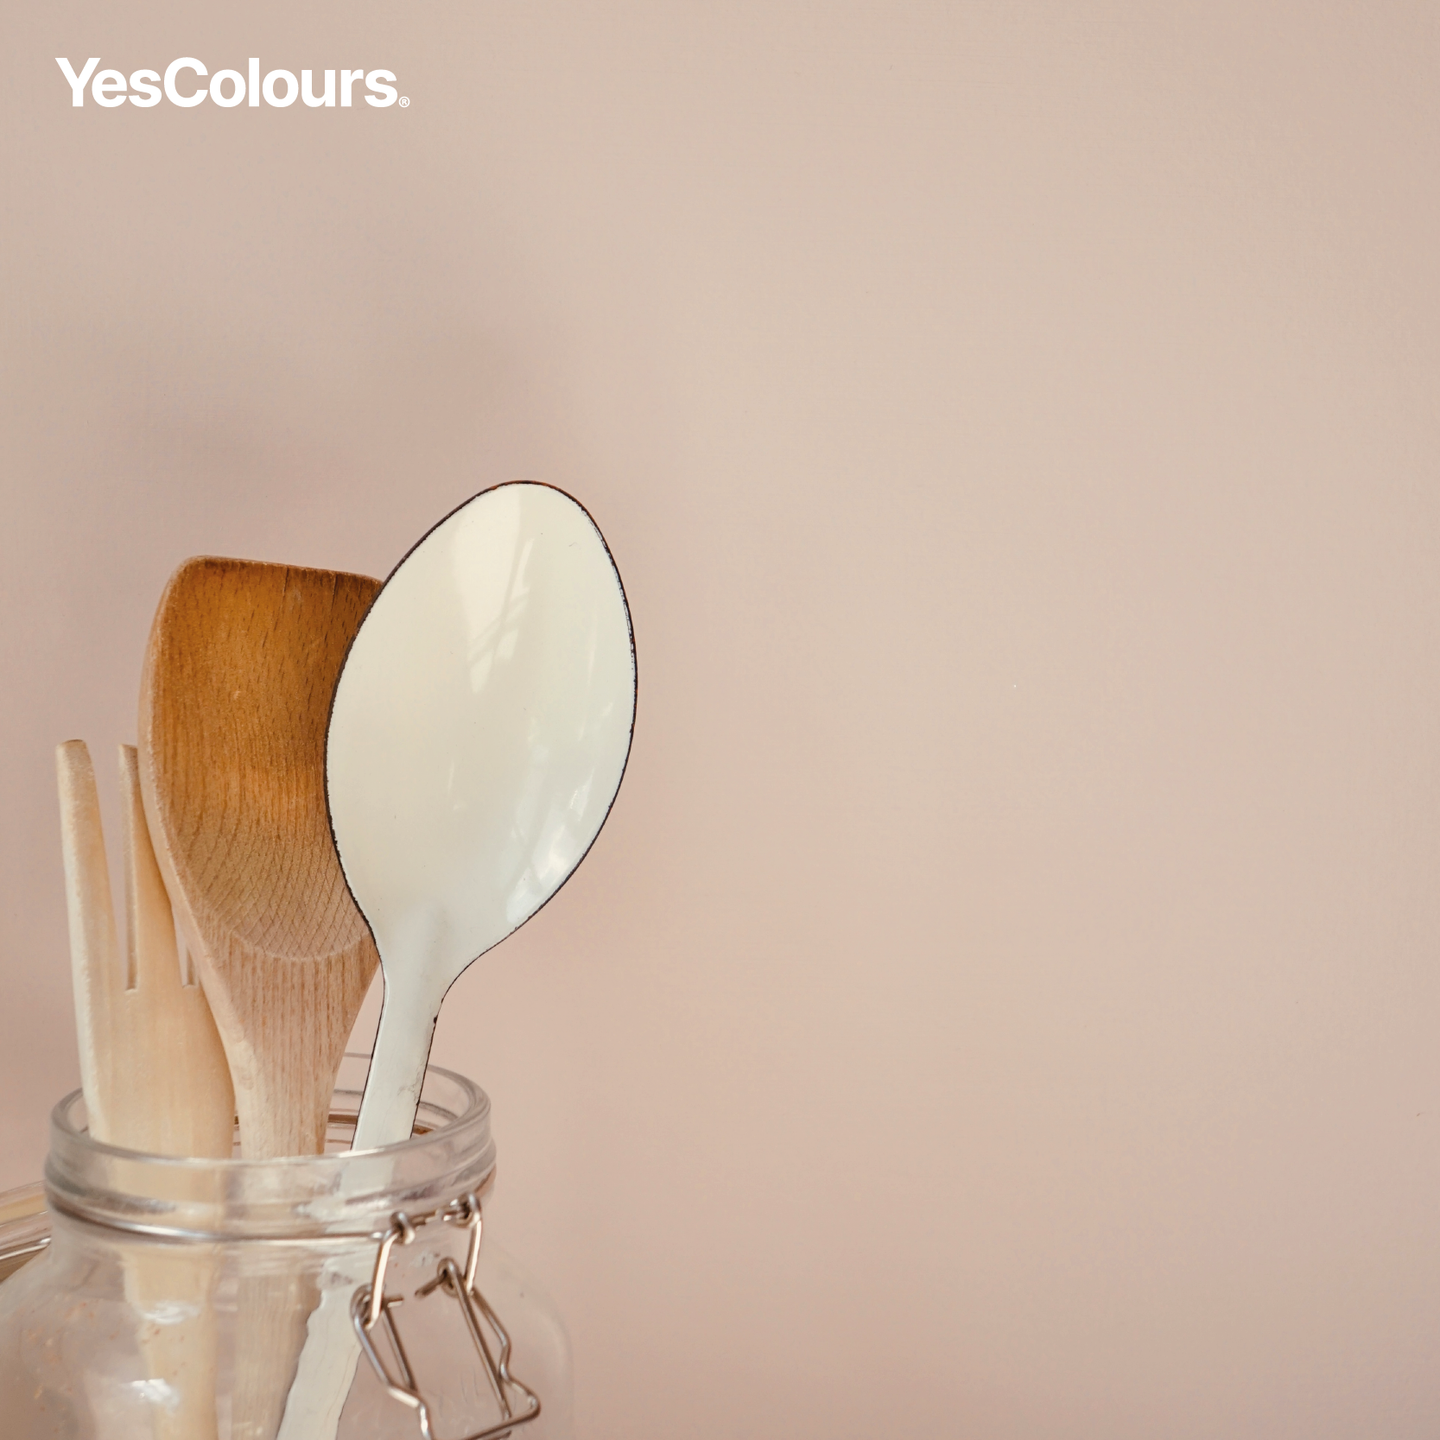 YesColours premium Serene Peach matt emulsion paint